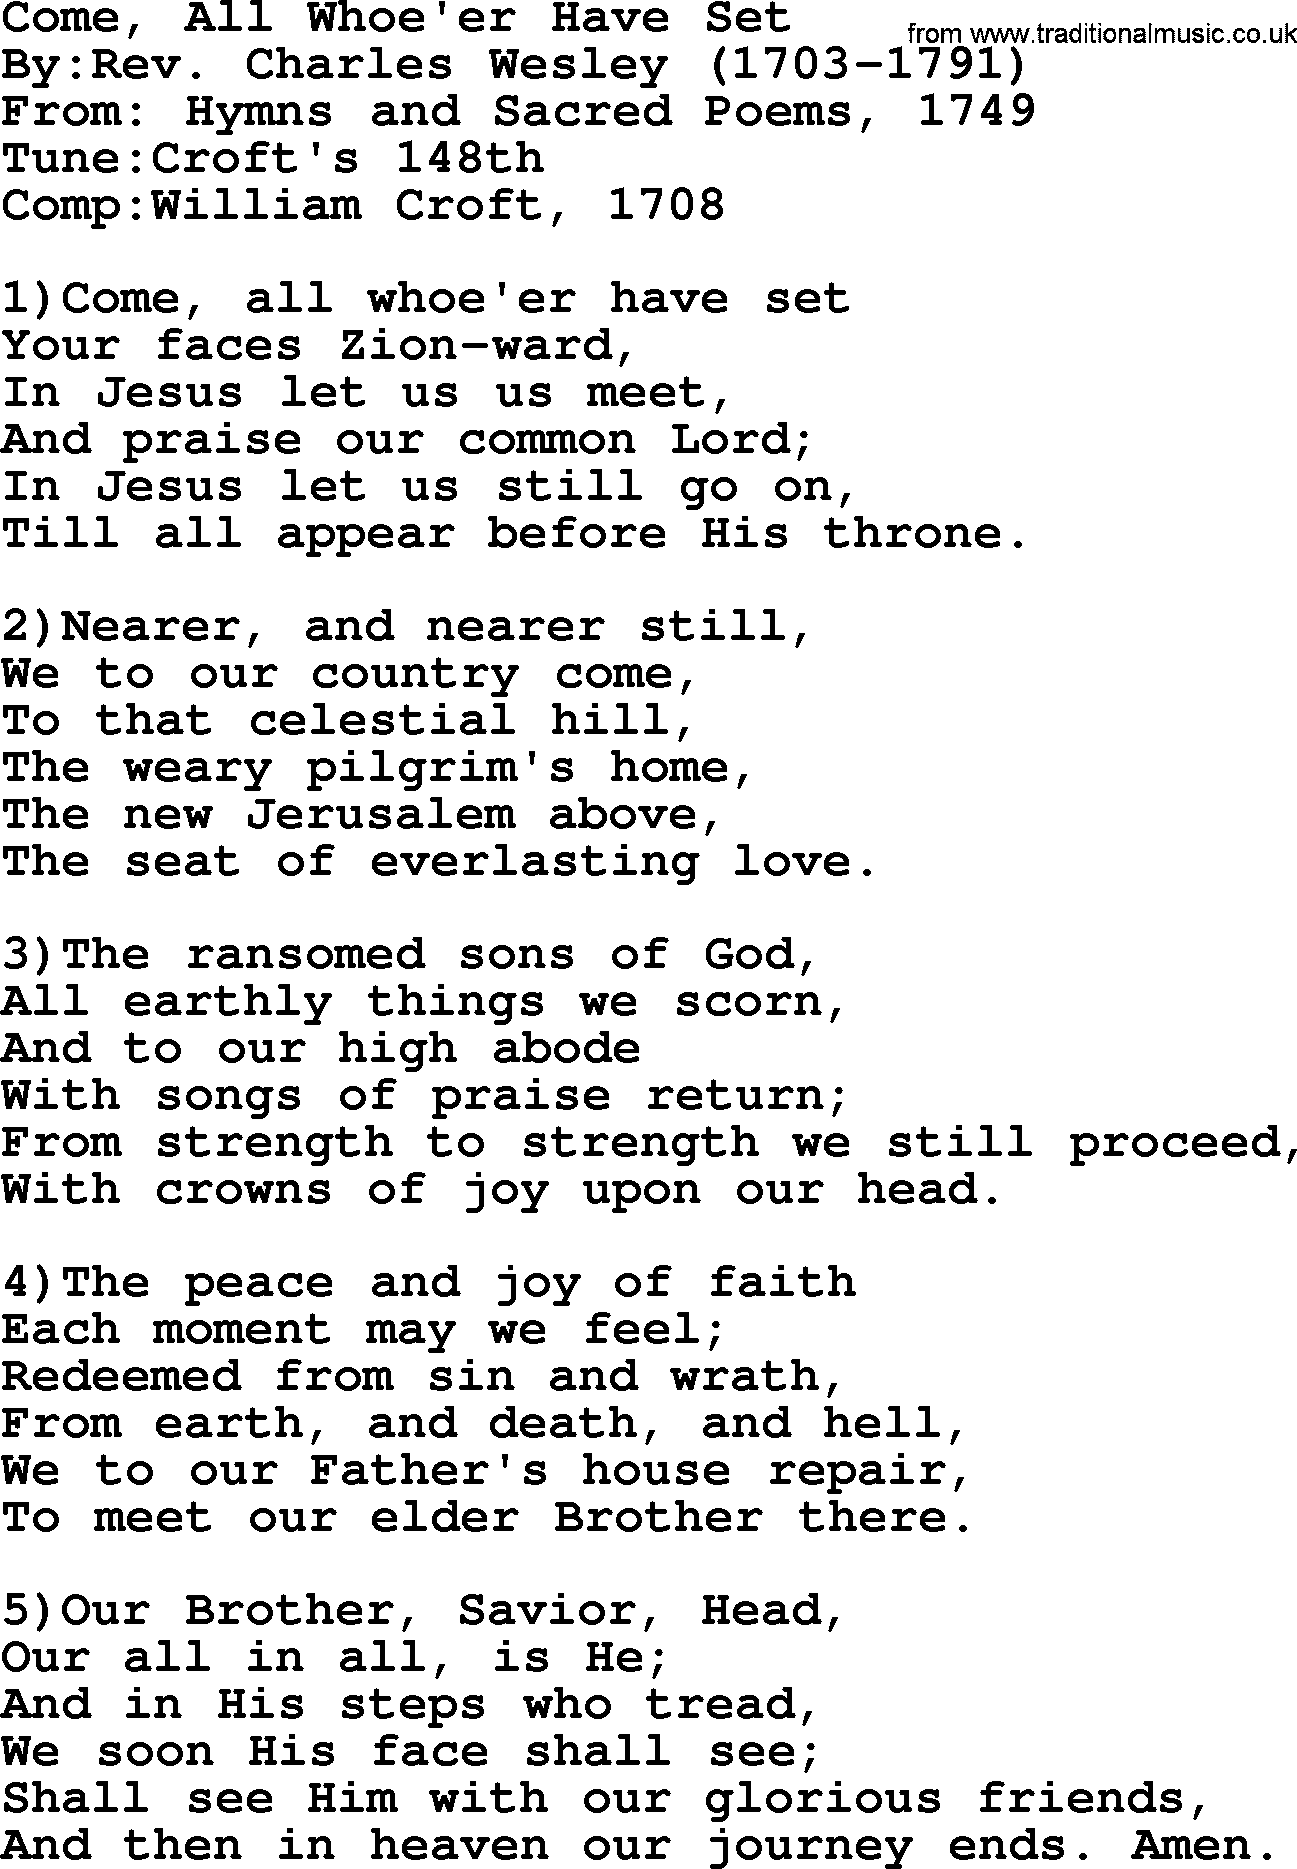 Methodist Hymn: Come, All Whoe'er Have Set, lyrics